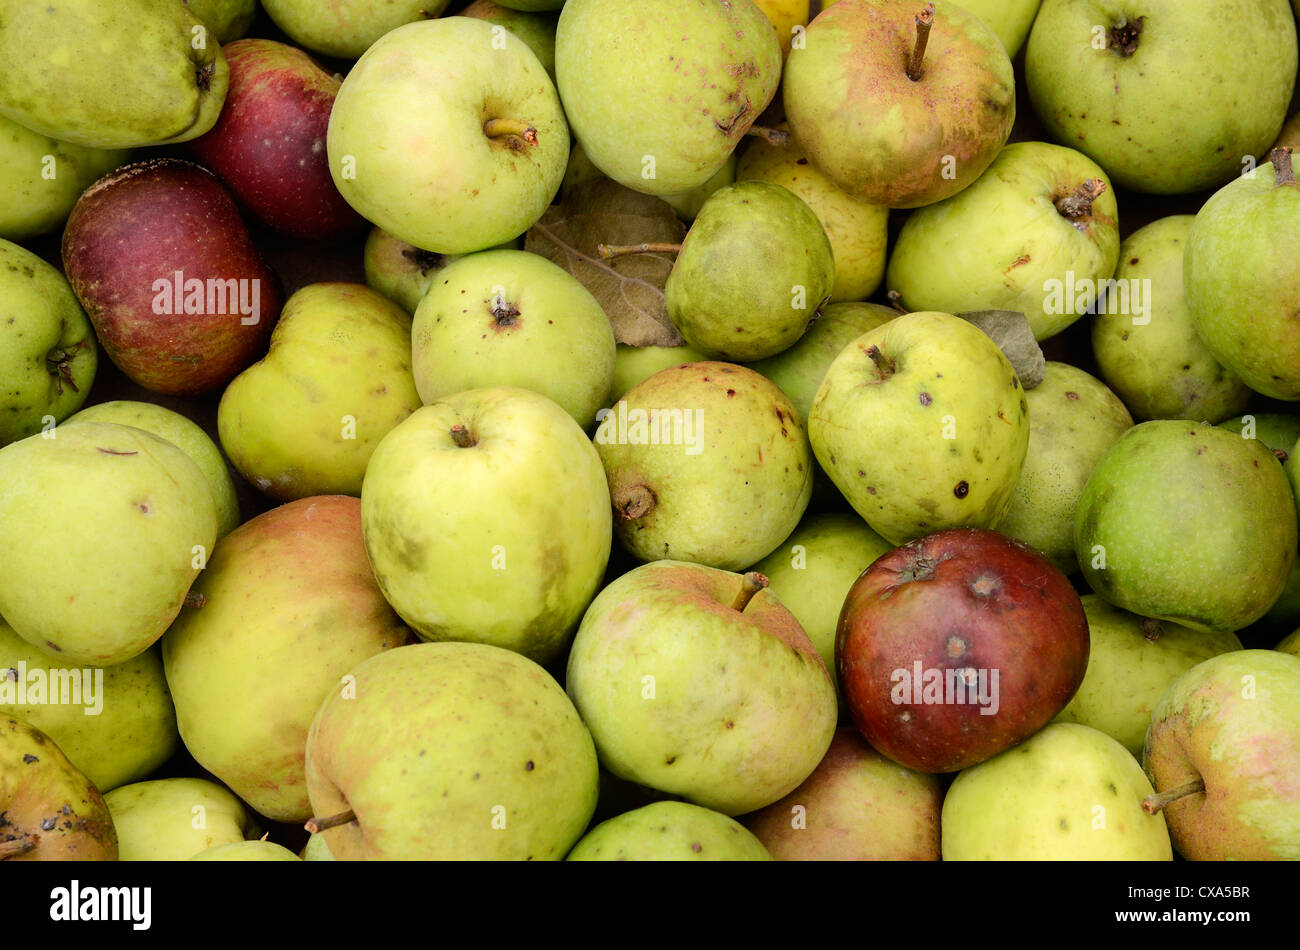 windfall english apples Stock Photo